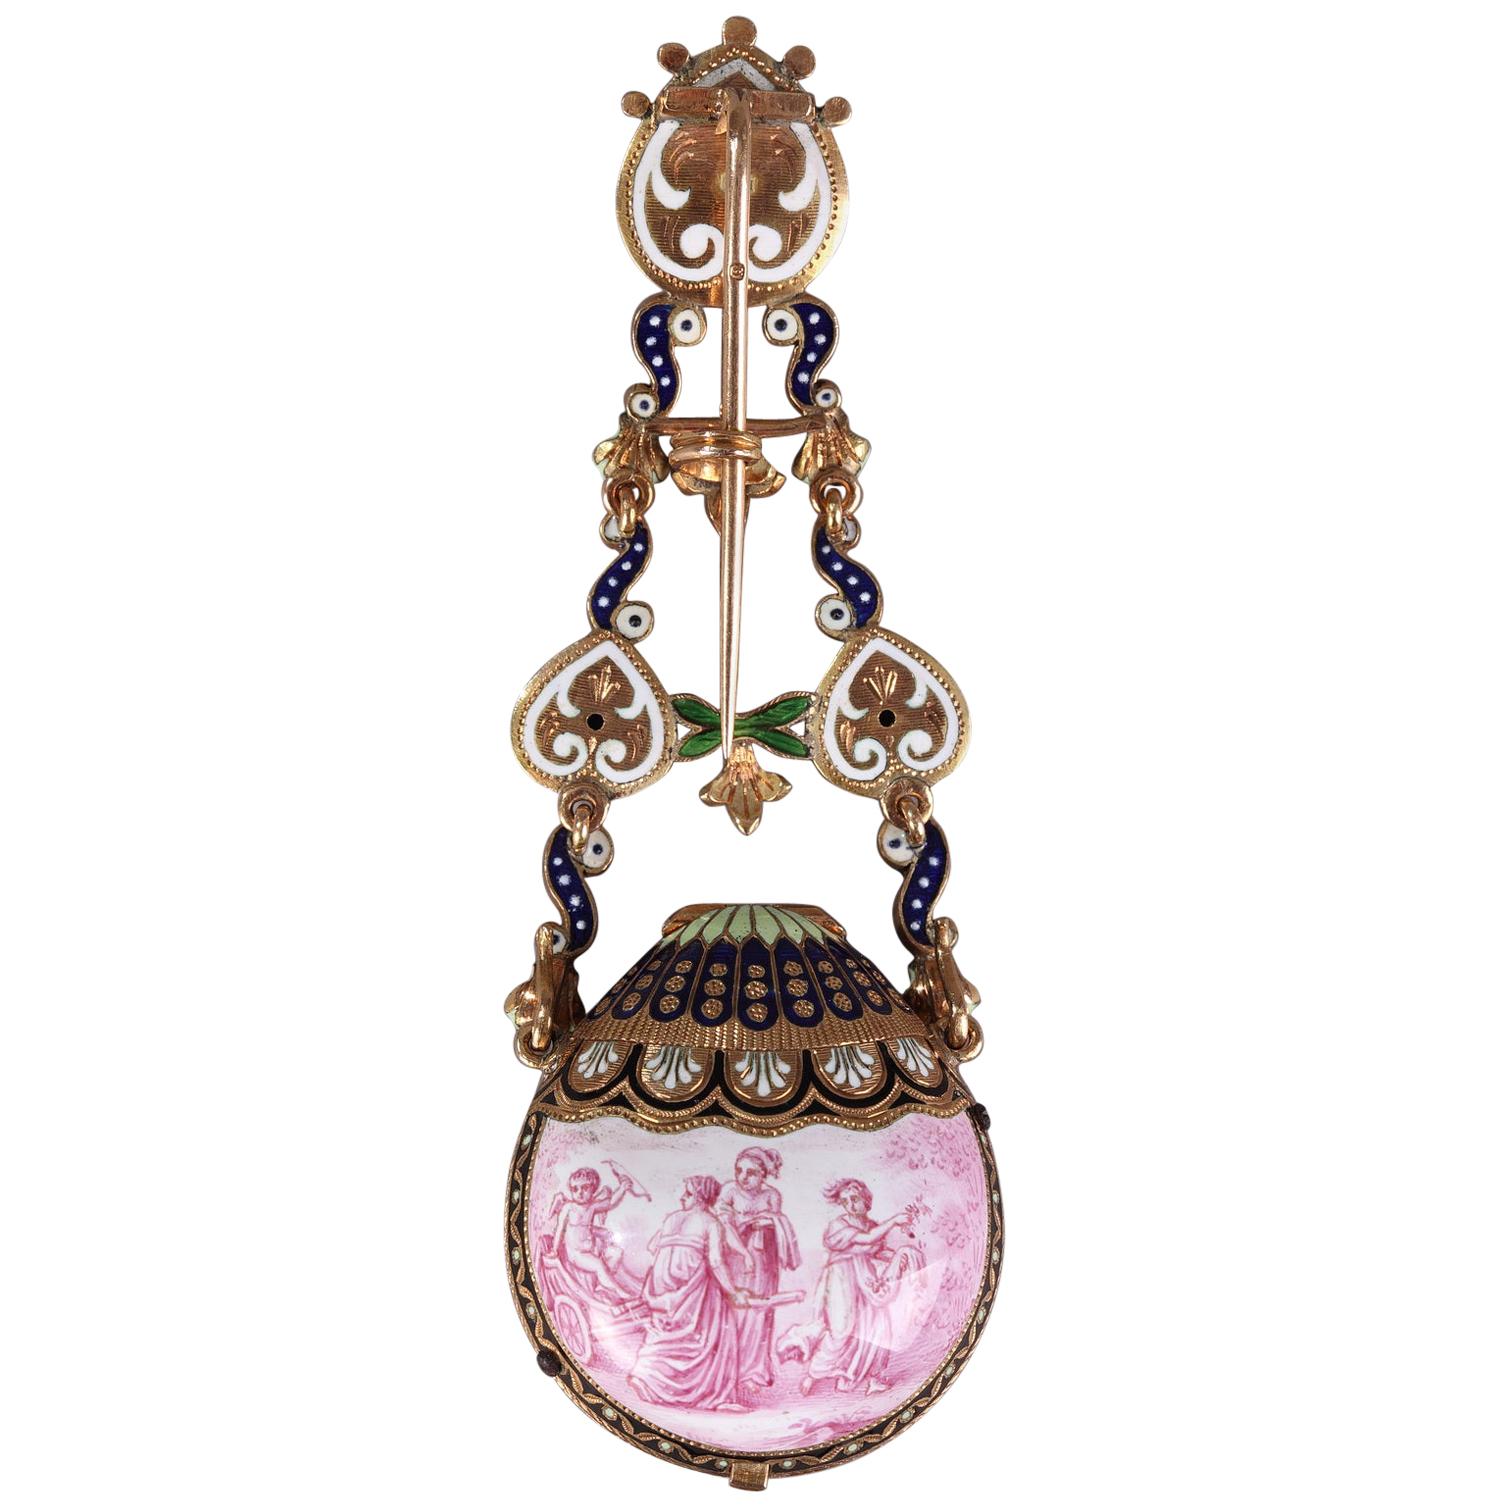 Gold and Enamel Watch/Chatelaine, Viennese Craftsmanship, circa 1860-1870